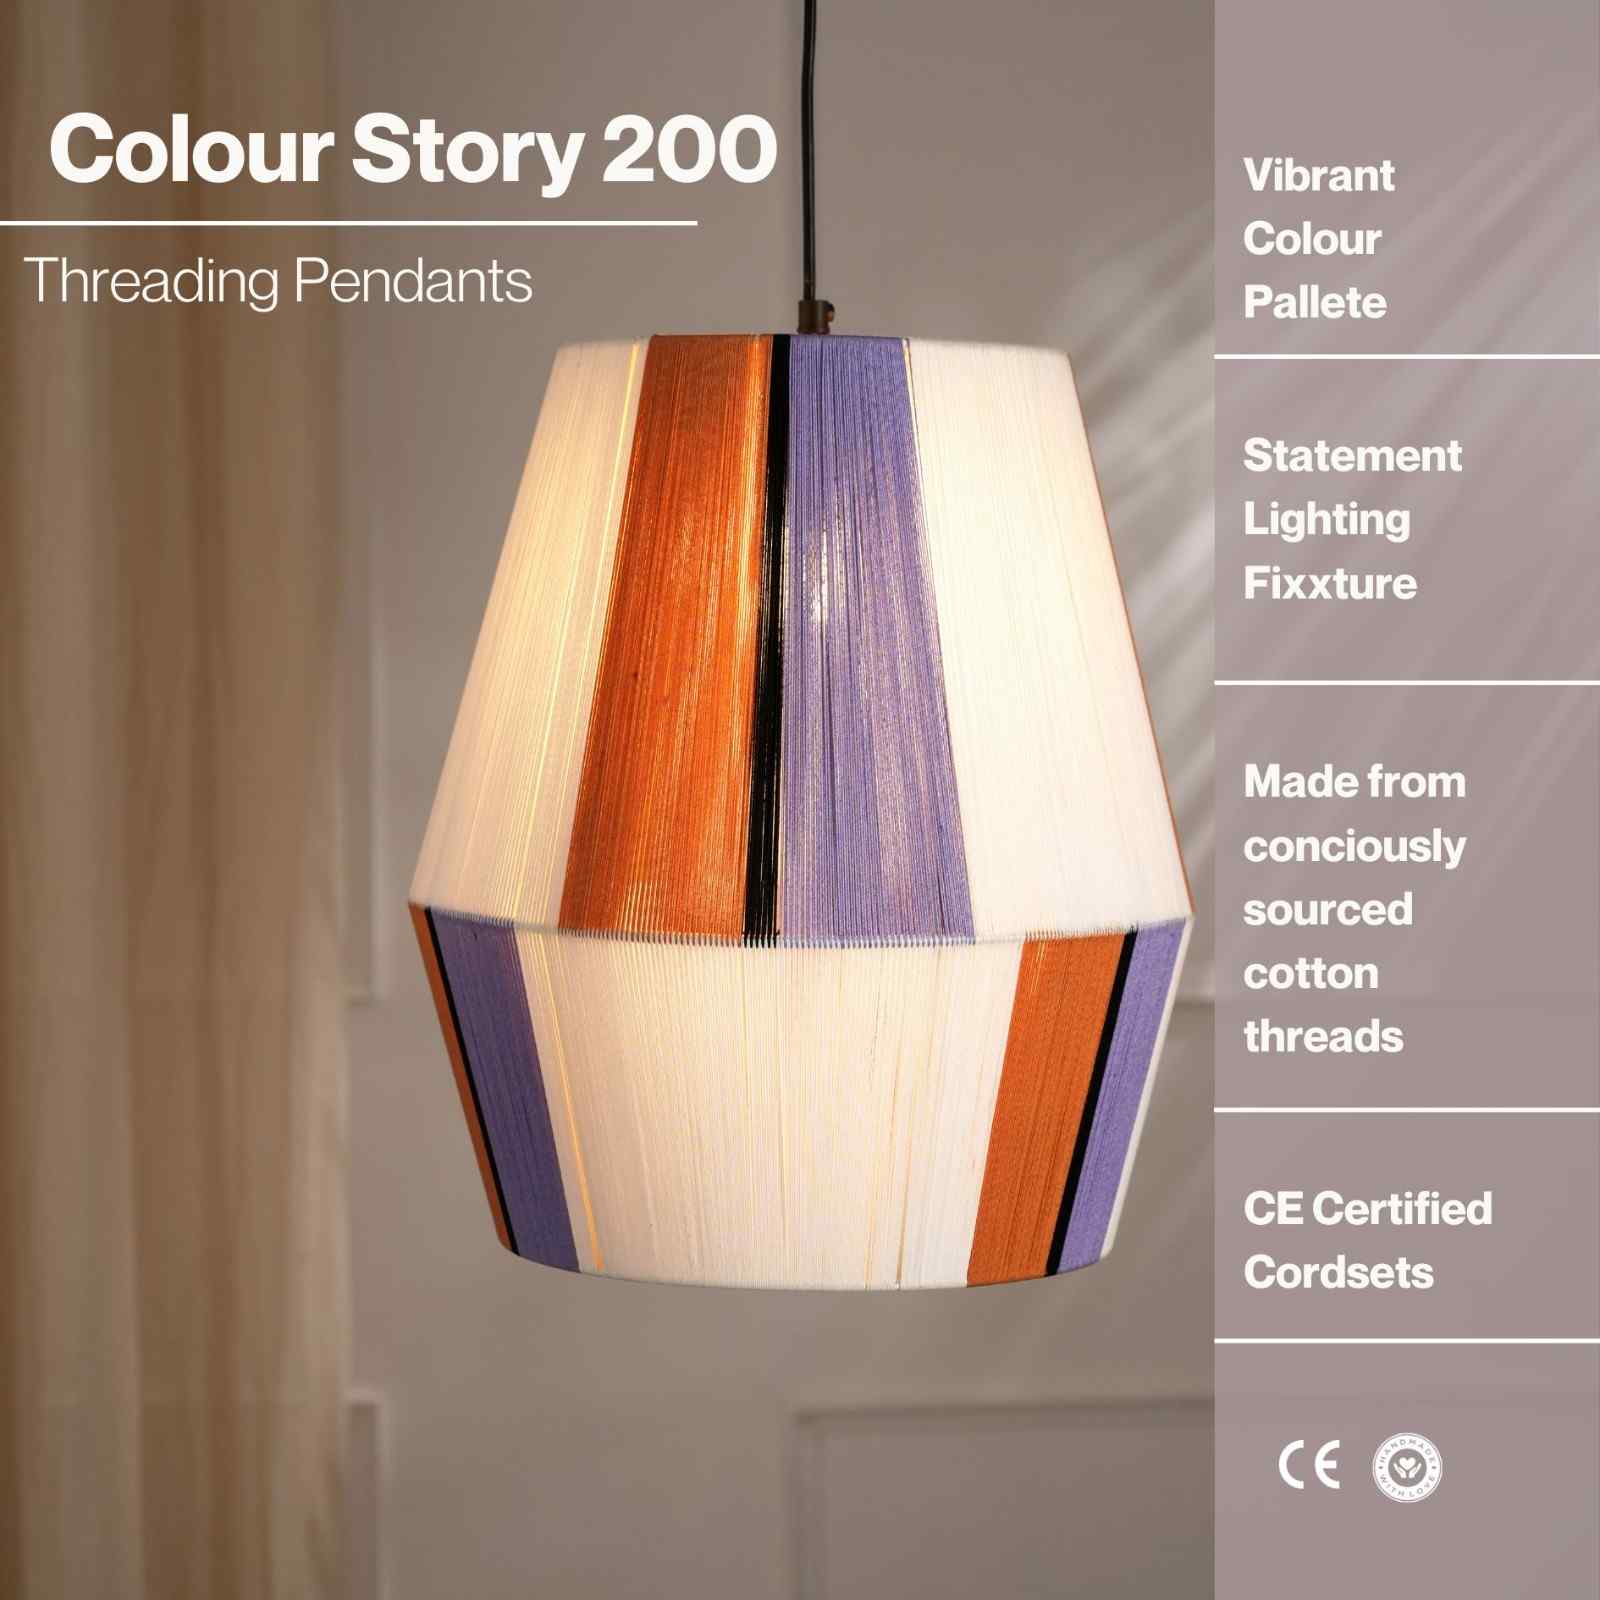 Colour Story 200 Lamp